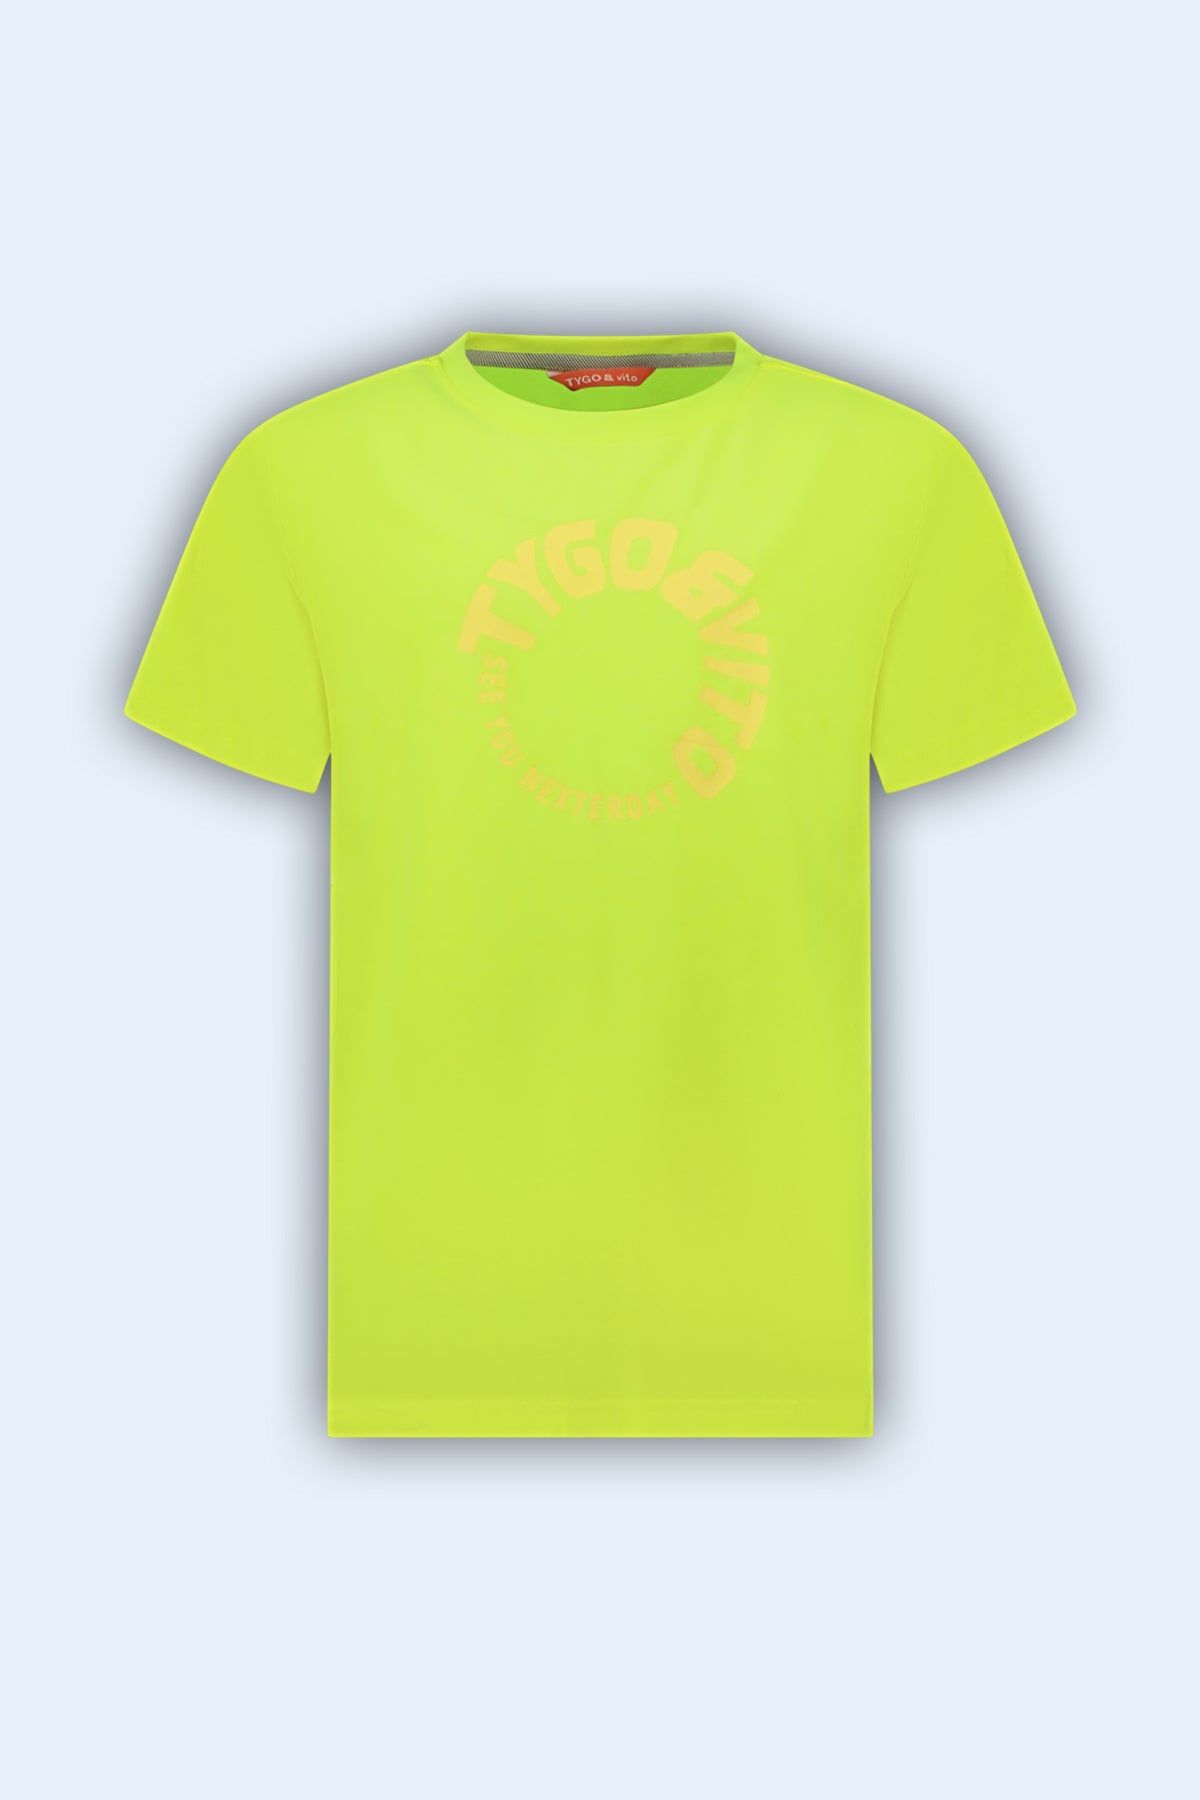 T-Shirt T-shirt James neon Yellow